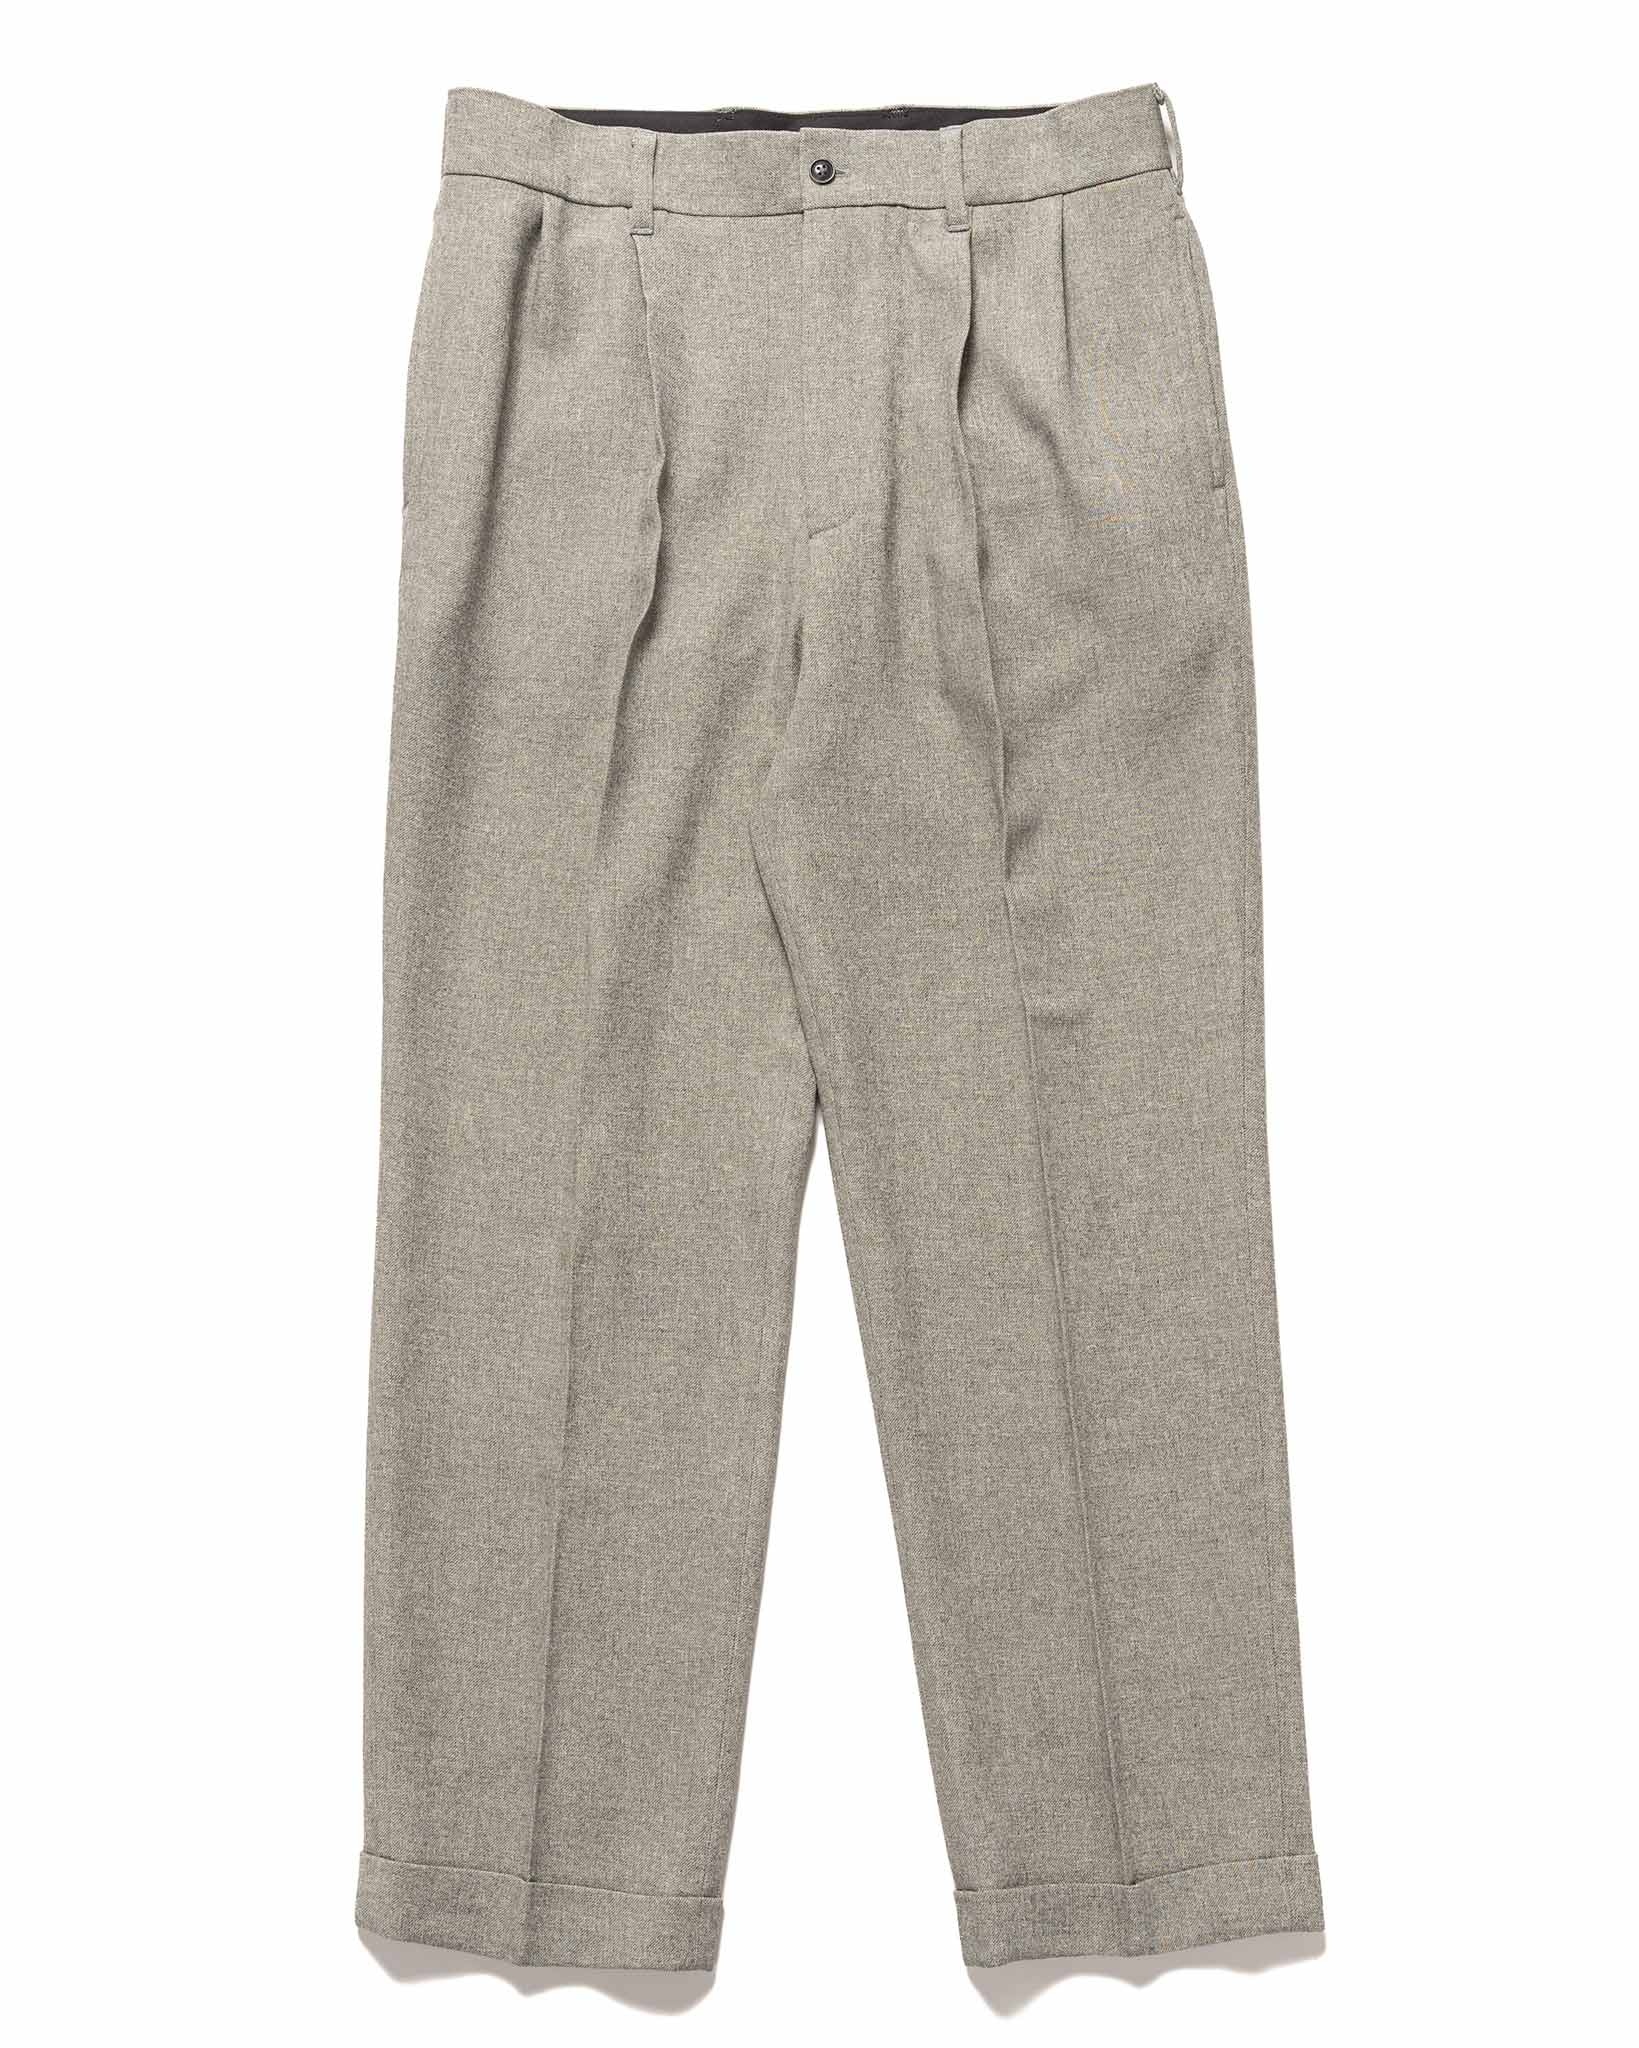 Tucked Trouser - PE/PU Stretch Twill Lt.Grey - 1